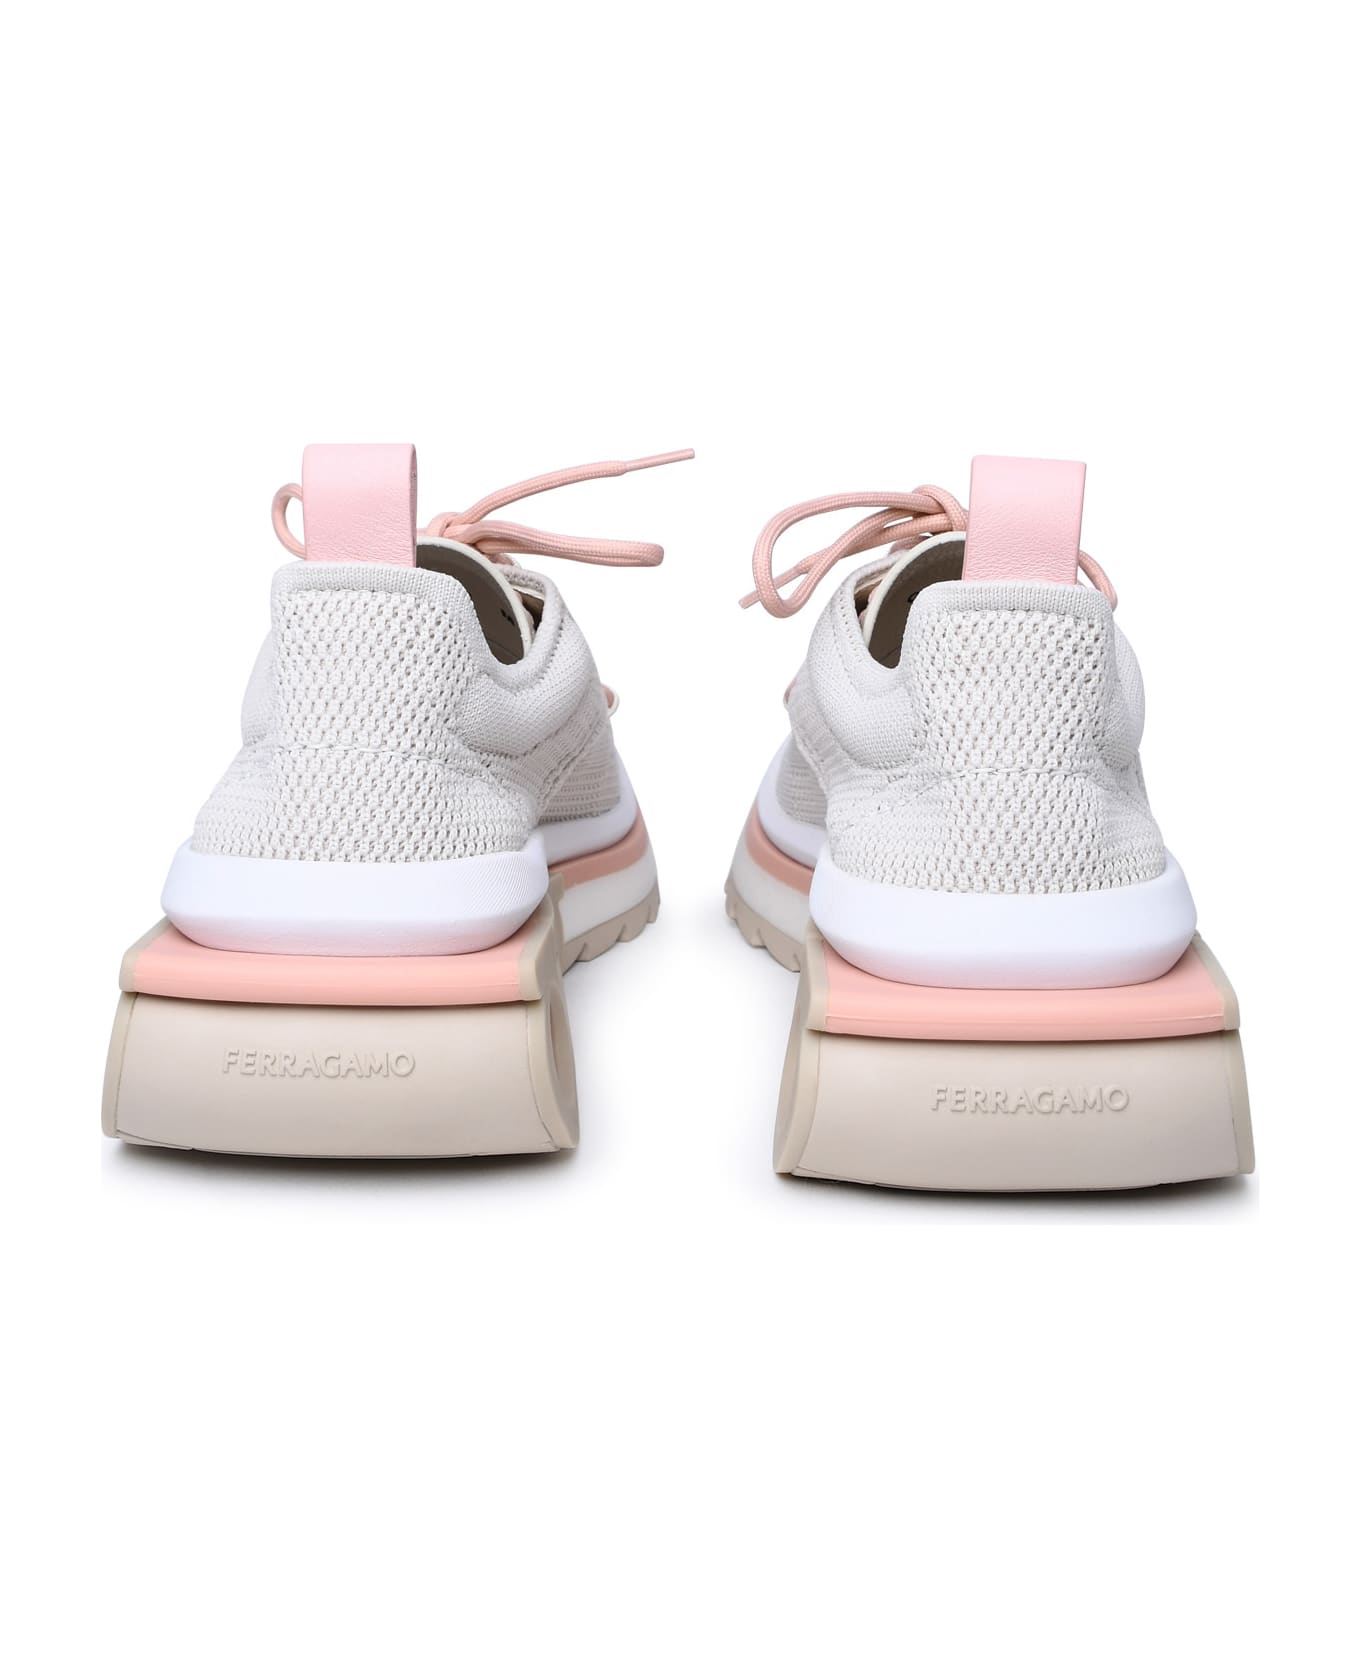 Ferragamo Two-tone Fabric Sneakers - Beige